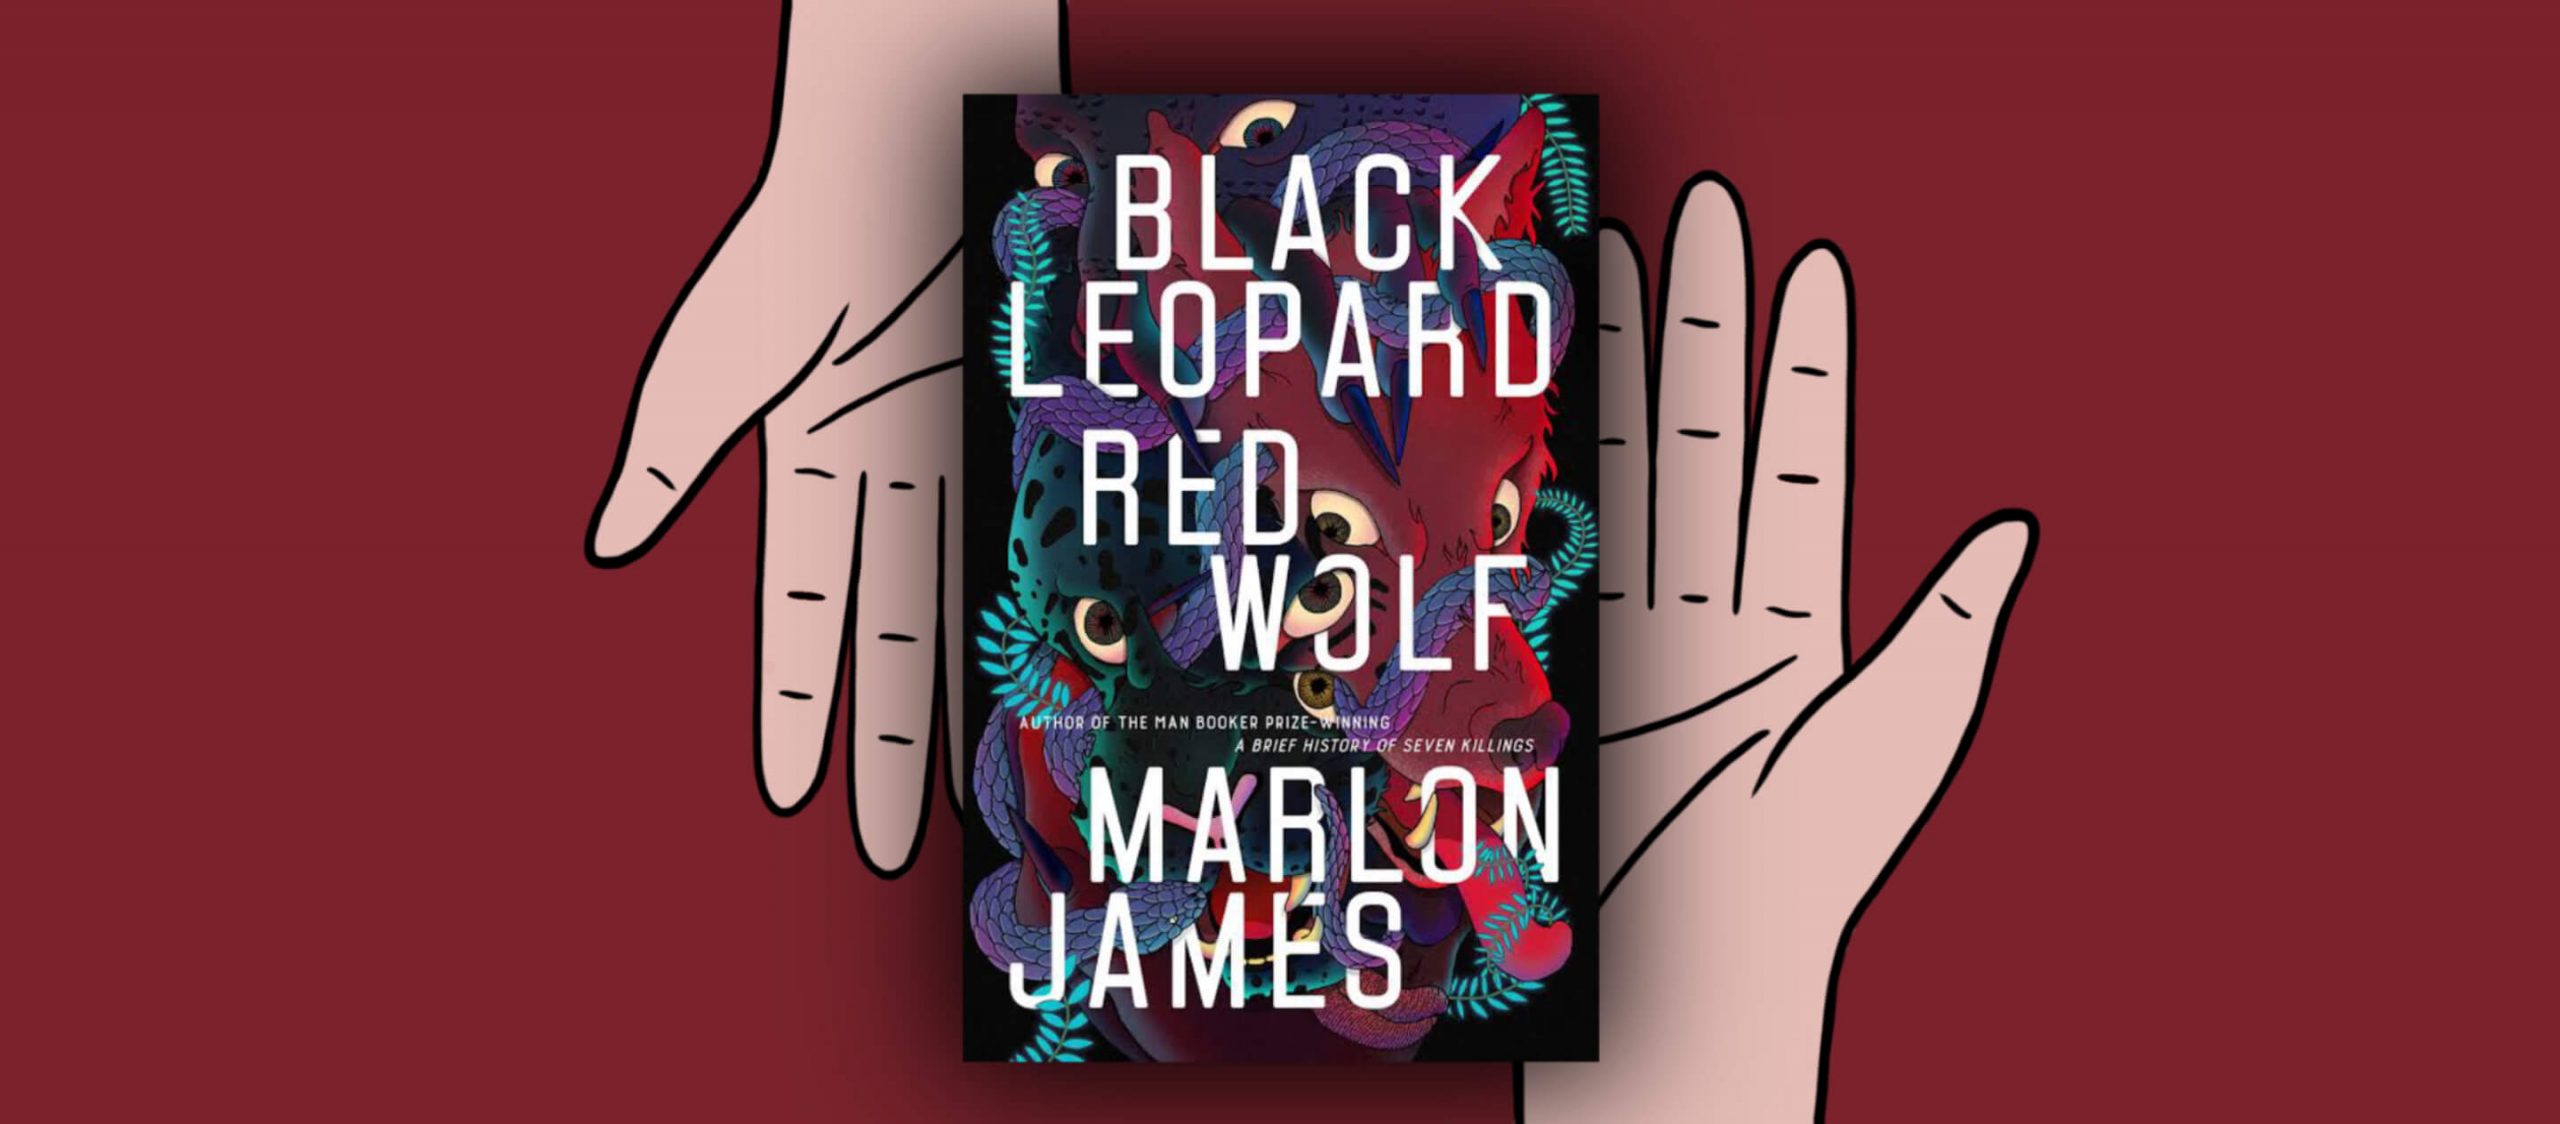 Black Leopard Red Wolf : นิยายแฟนตาซีที่ฮีโร่ล้มเหลวไม่เป็นท่า และมีแอฟริกาเป็นฉากหลัง